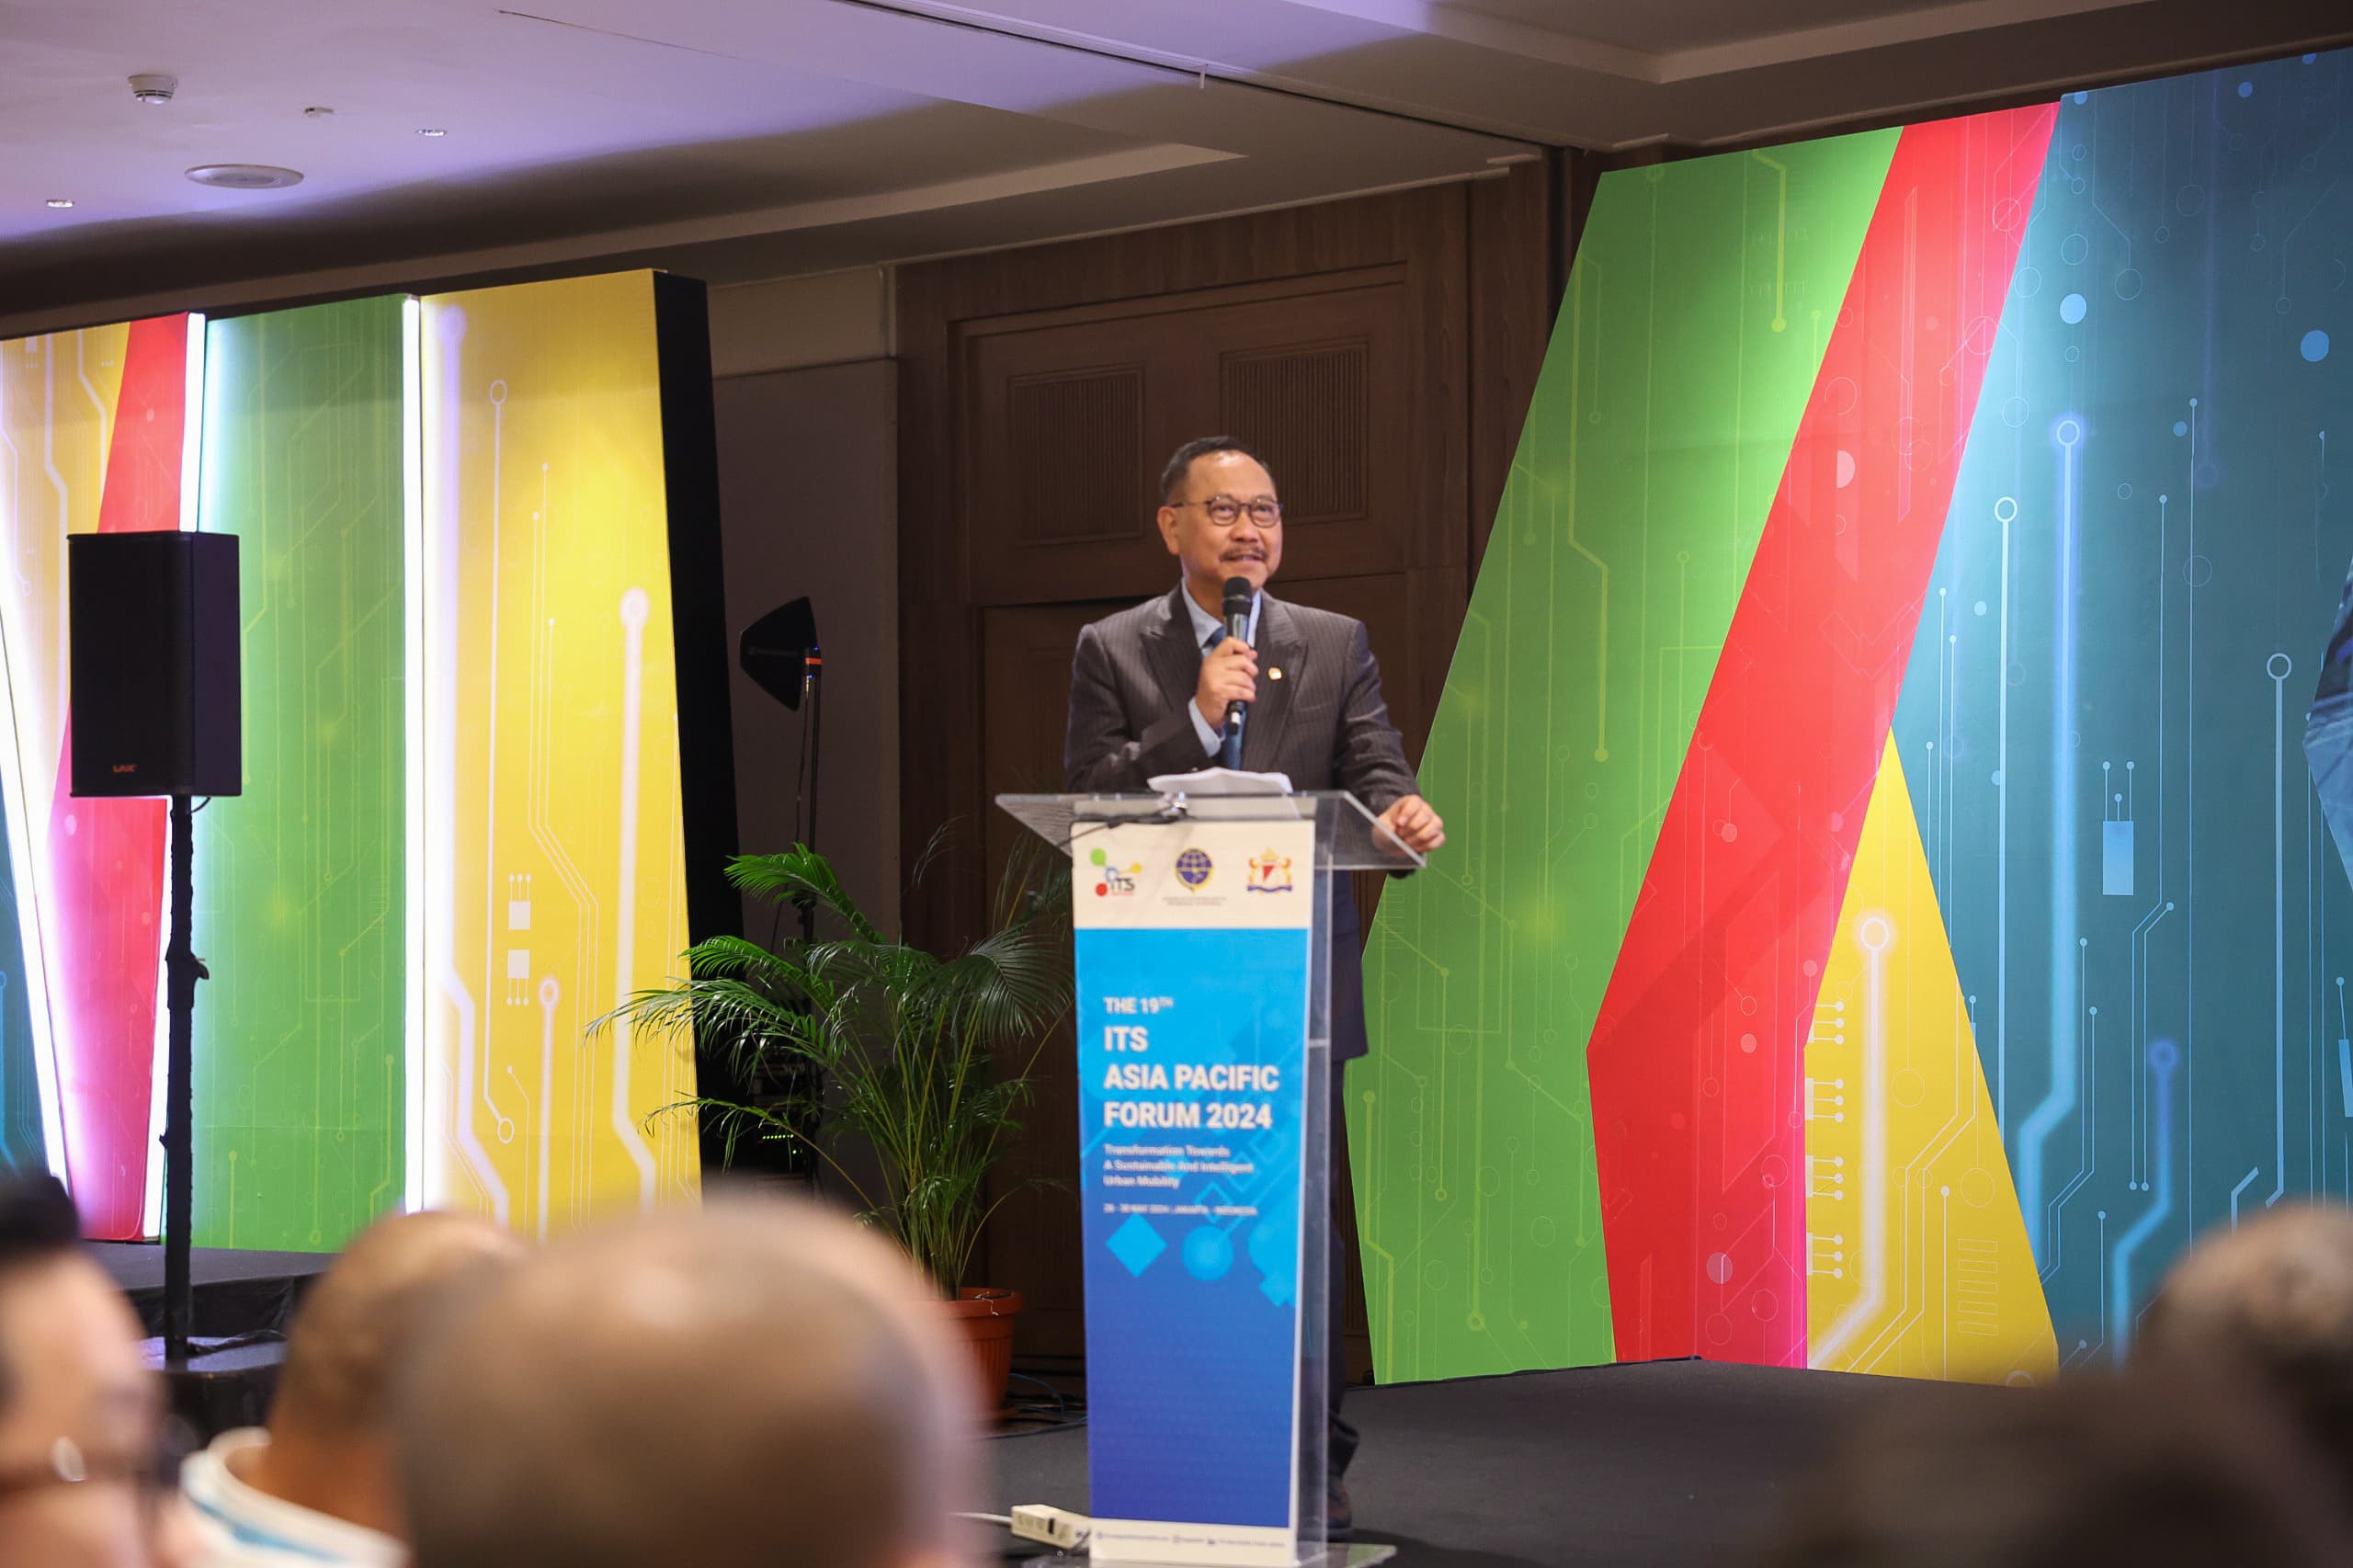 Apa Itu Kota Cerdas Nusantara, Berikut Paparan Kepala OIKN di ITS Asia Pacific Forum 